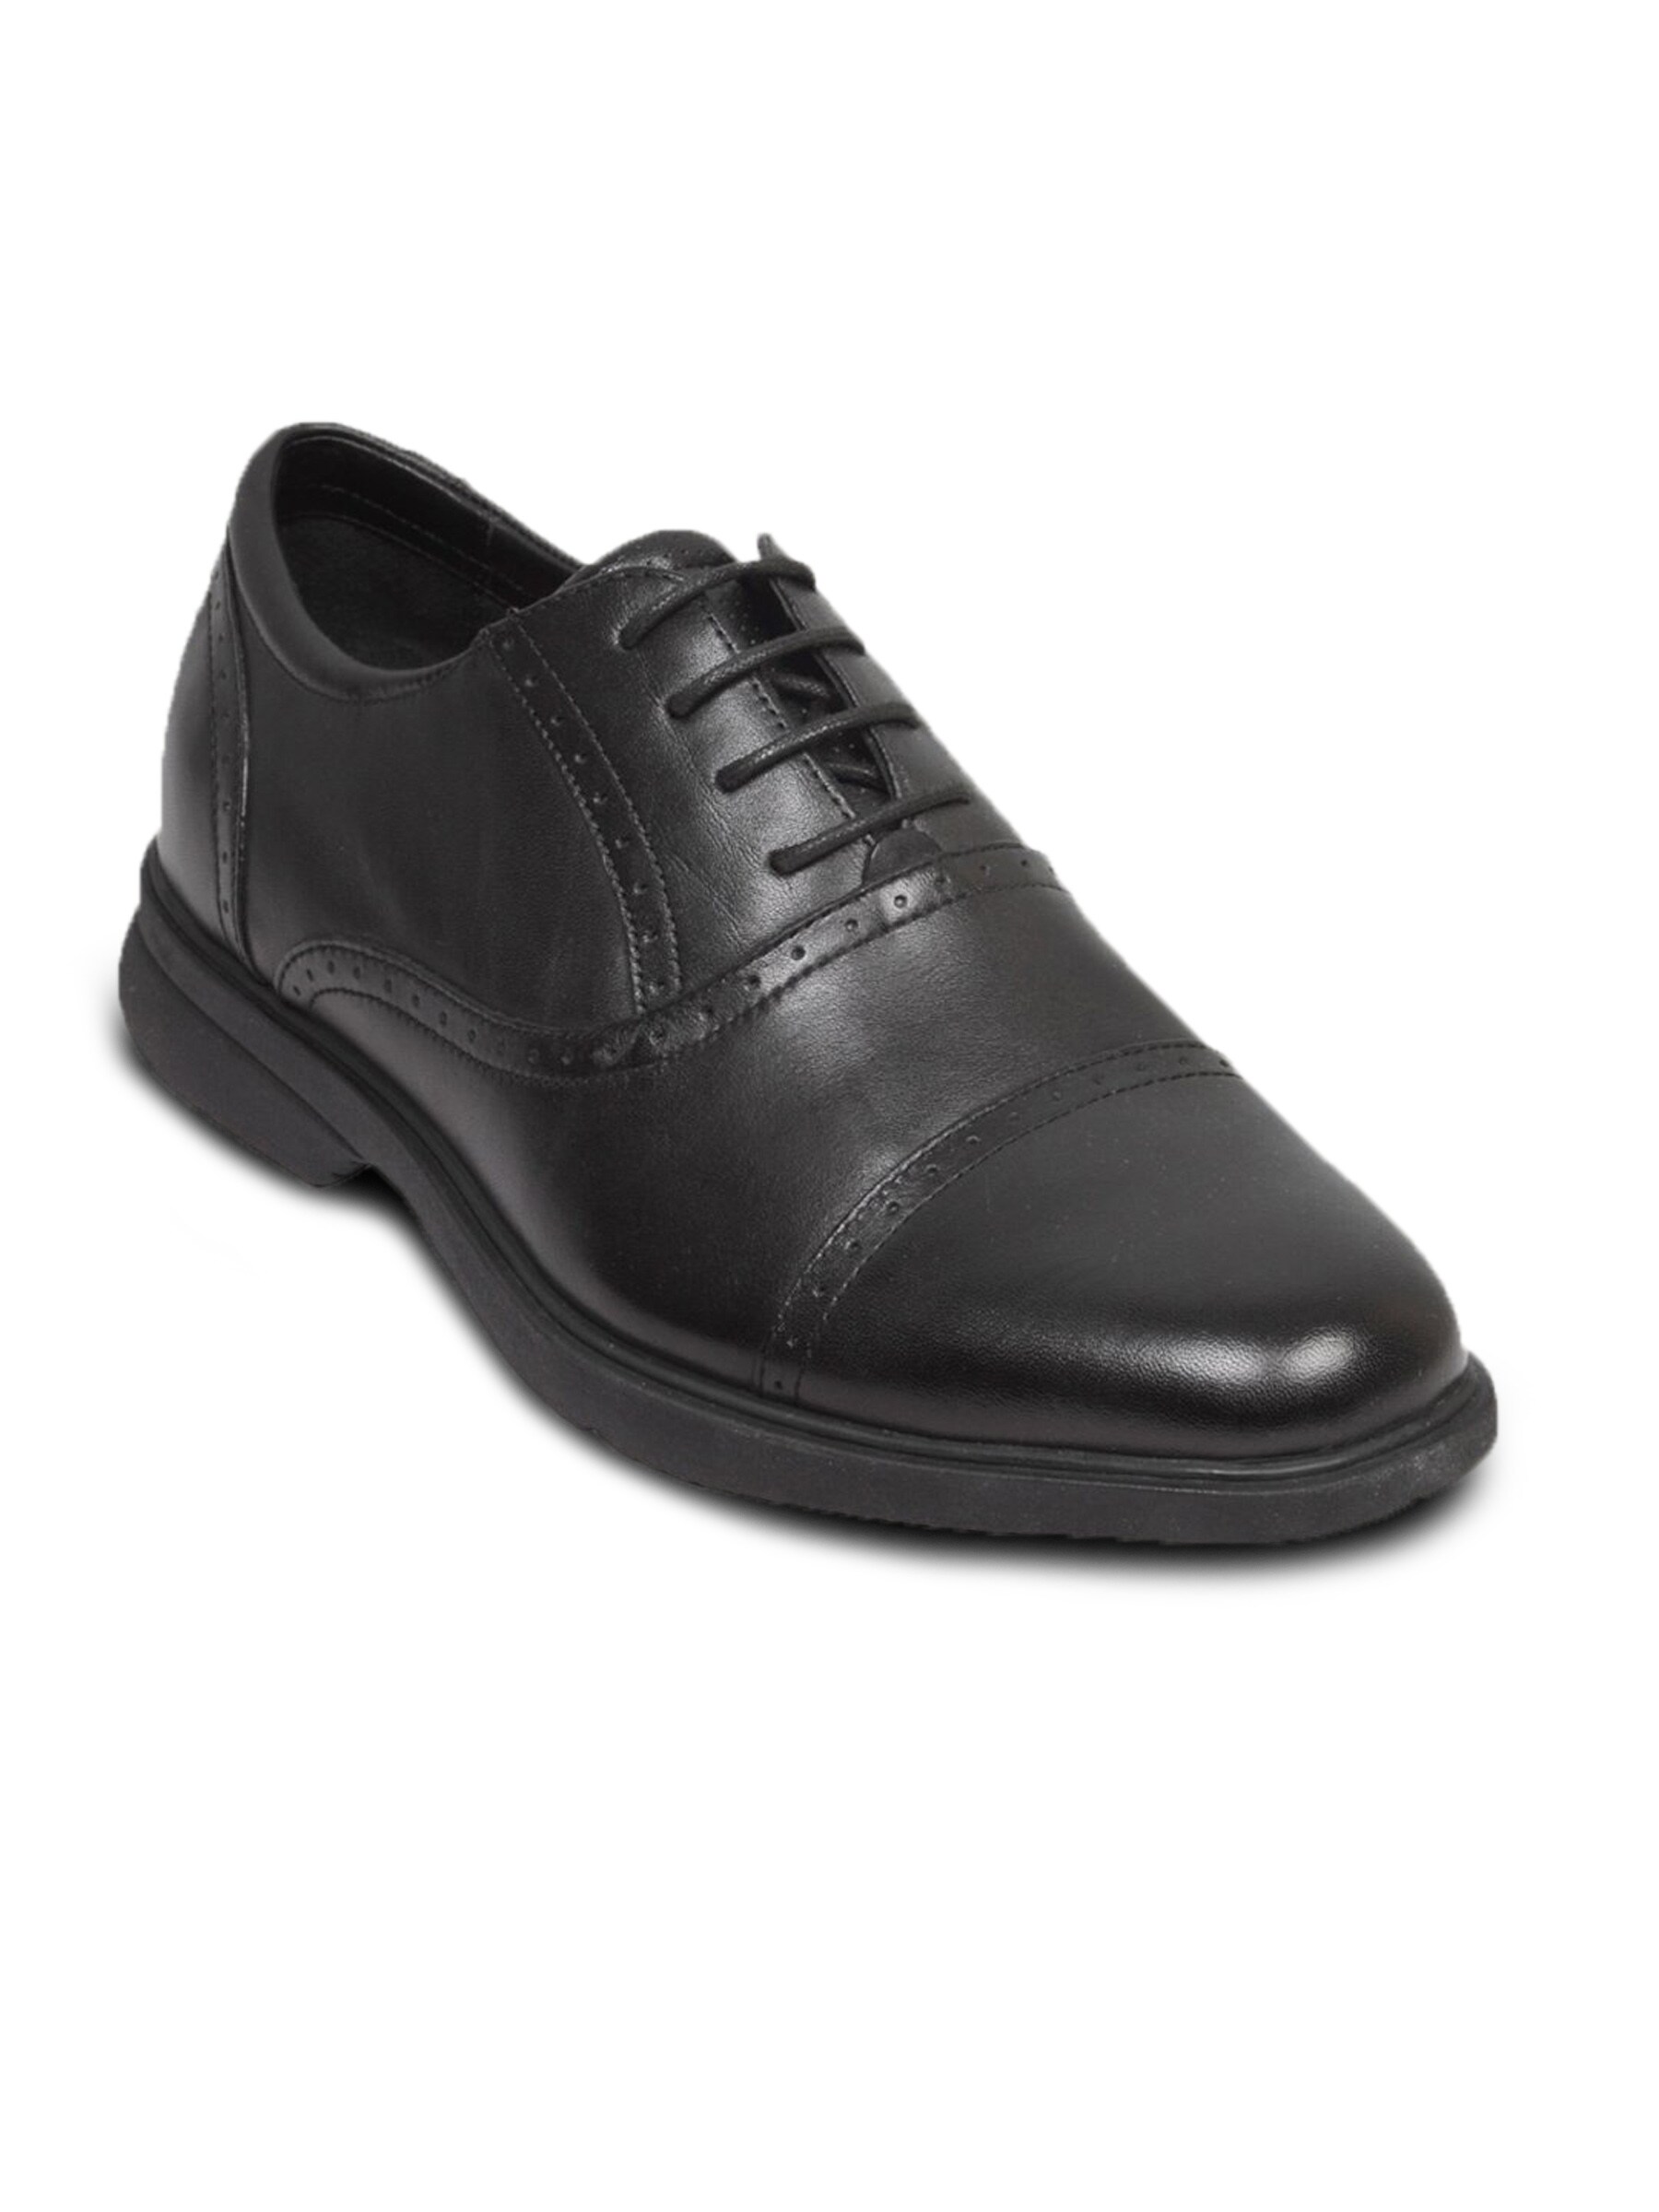 Rockport Men's Anniello Black Shoe